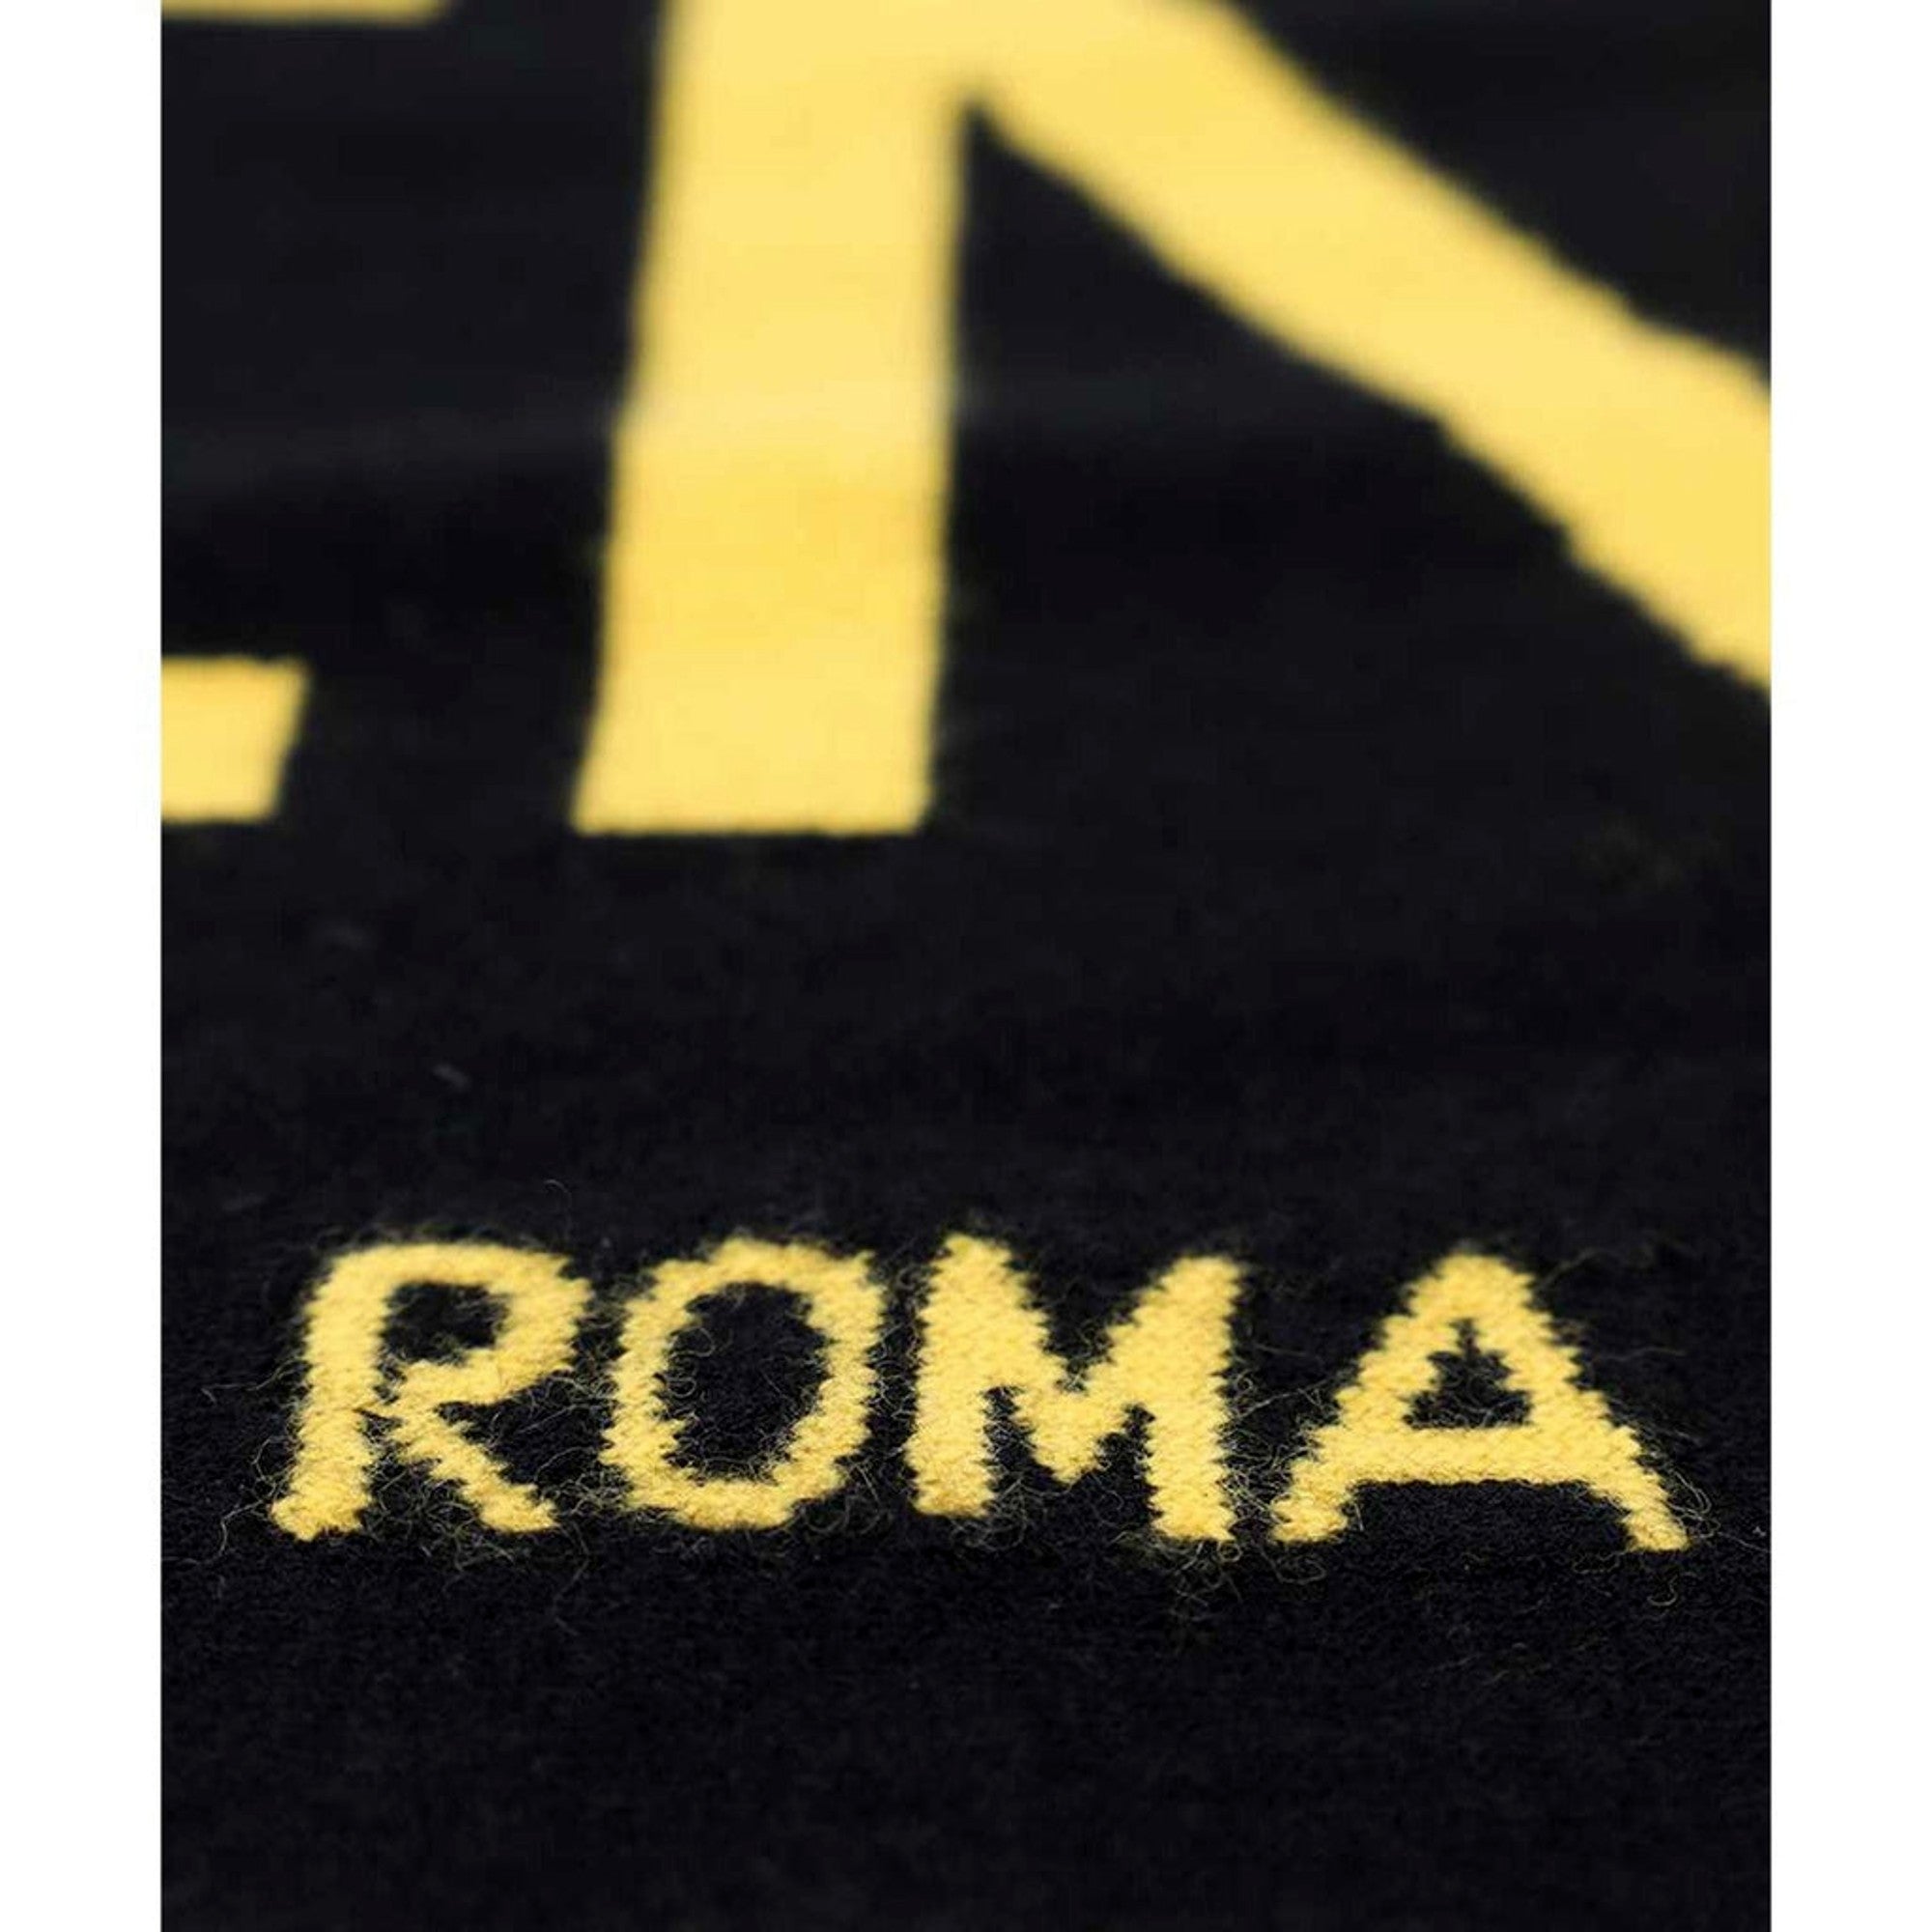 Fendi Roma Knitted Wool Cashmere Black Yellow Logo Scarf